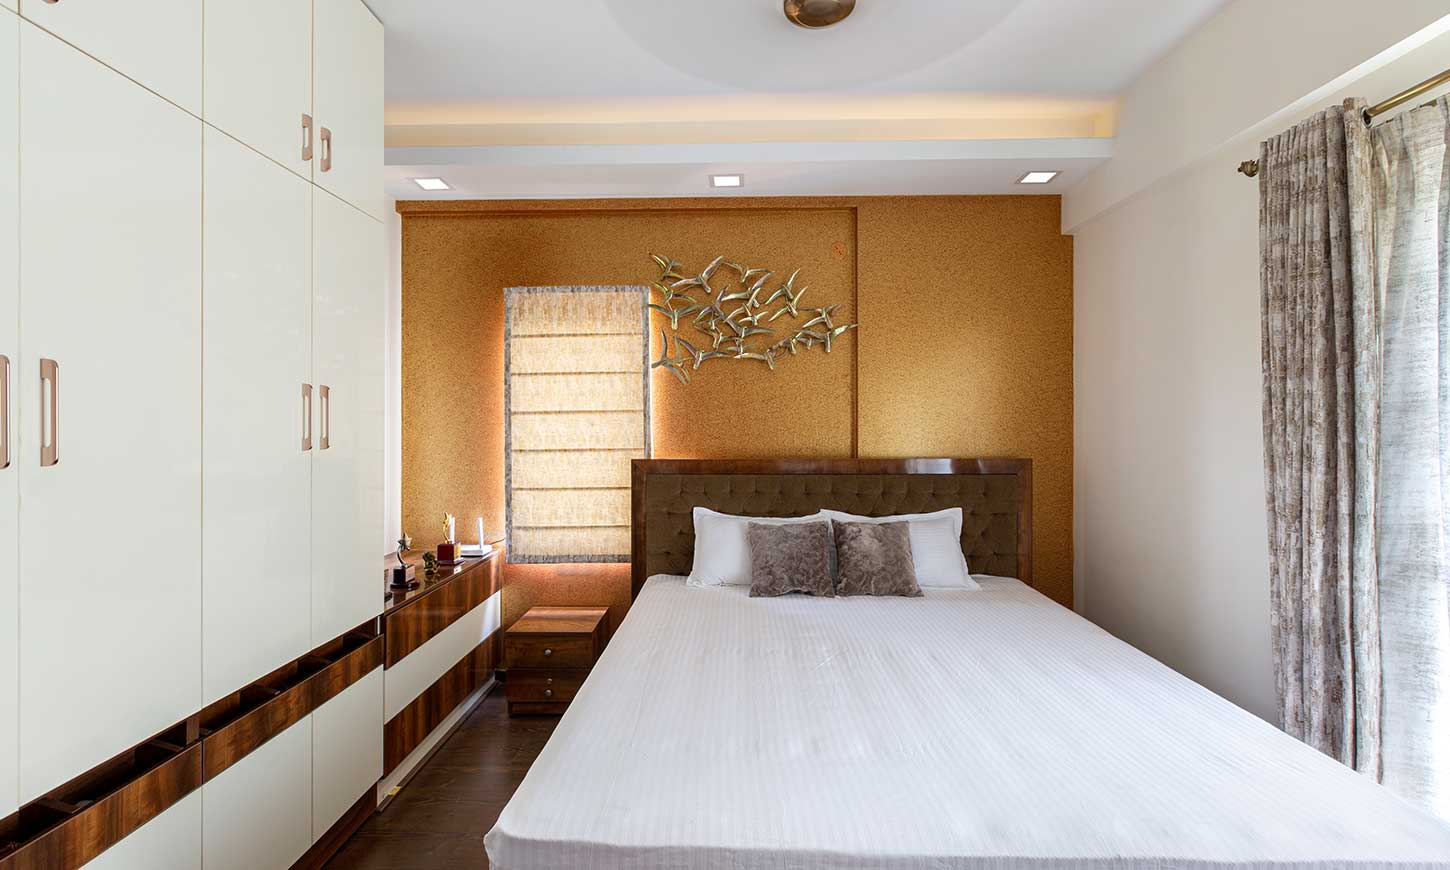 bangalore interior designers cost for bedroom interior